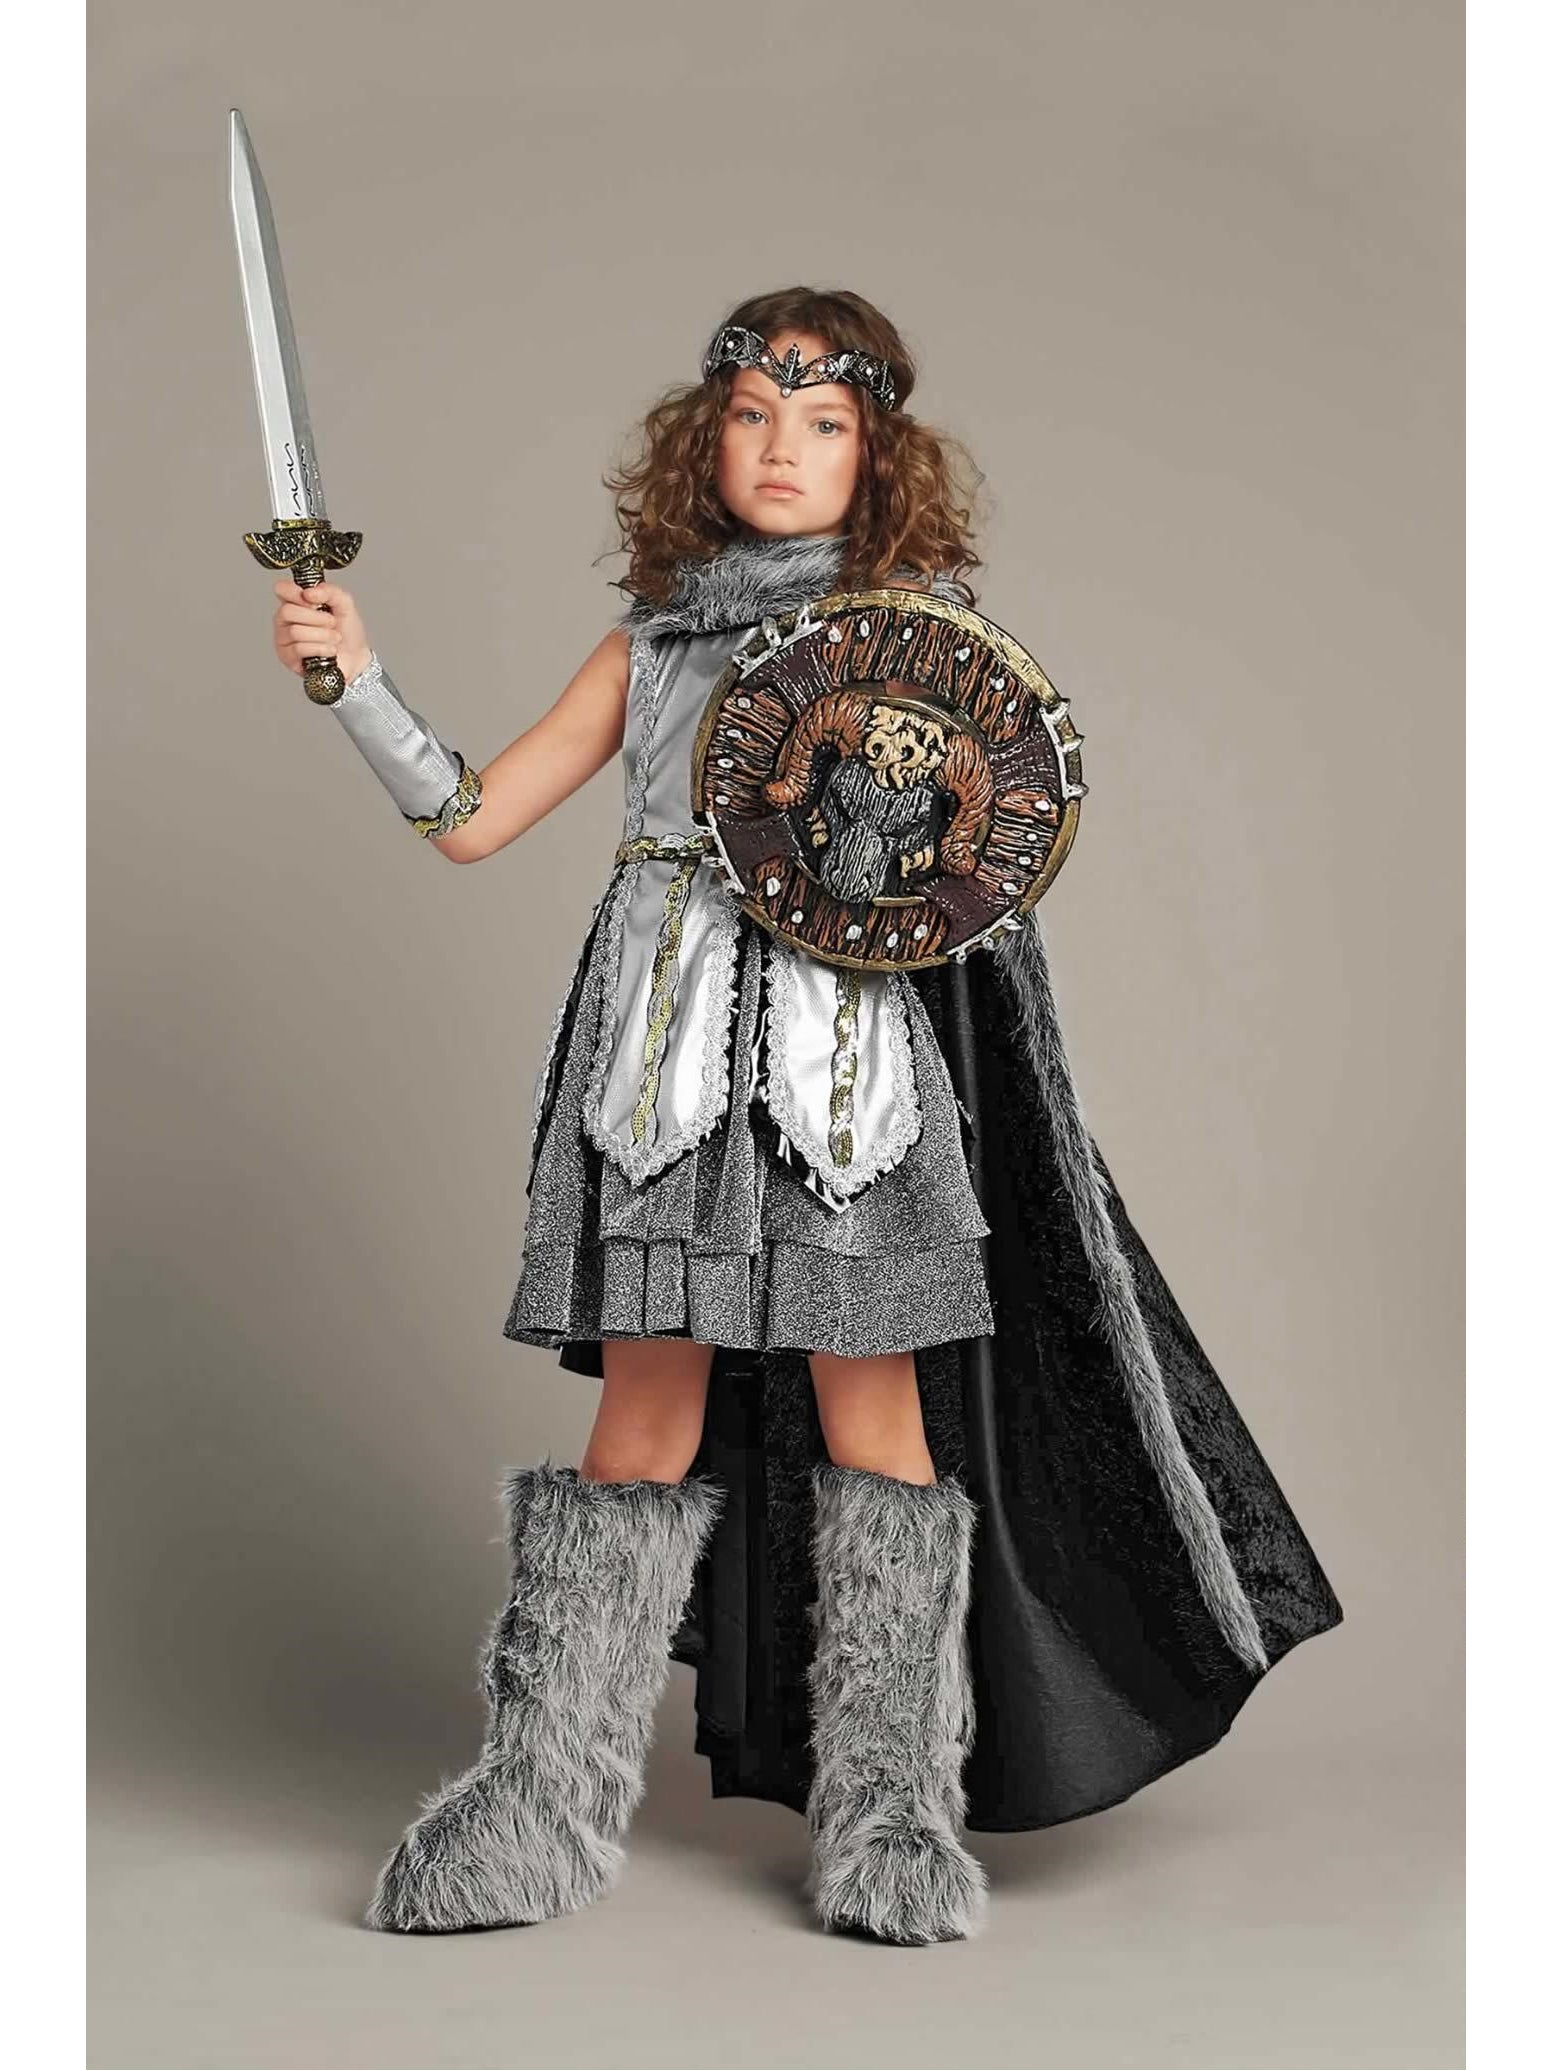 Warrior Costume for Girls - Chasing 